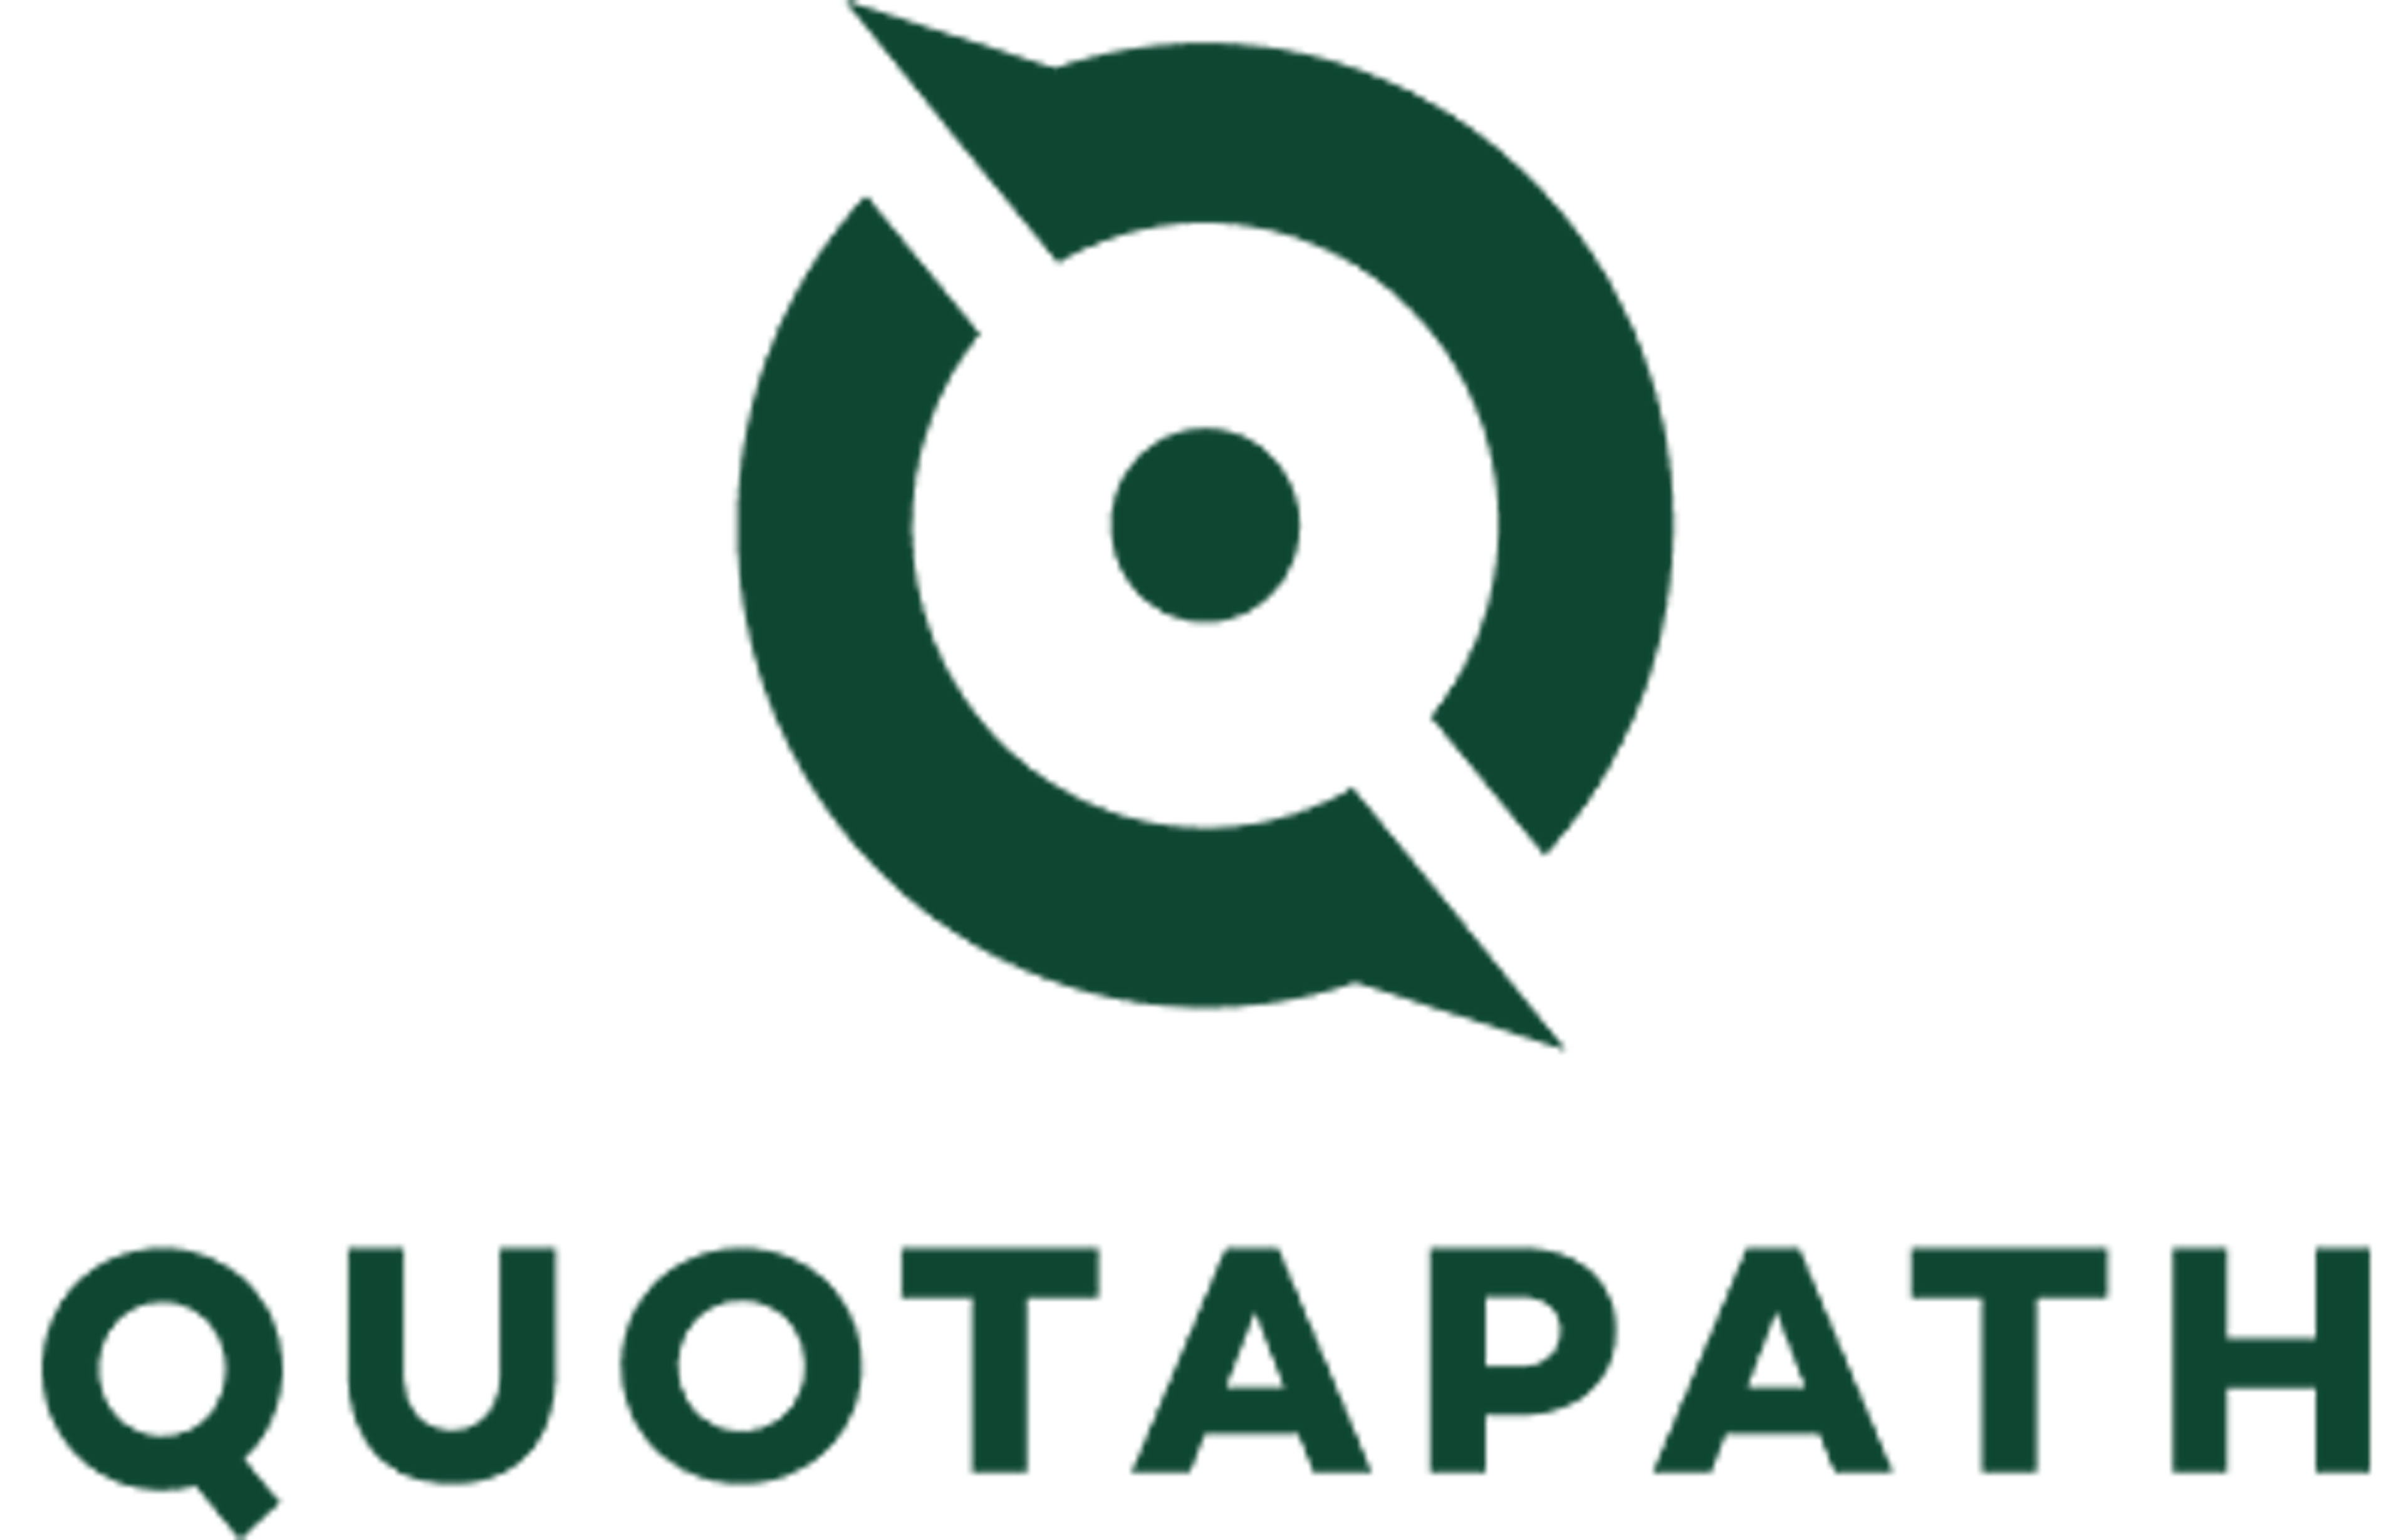 QuotaPath Logo